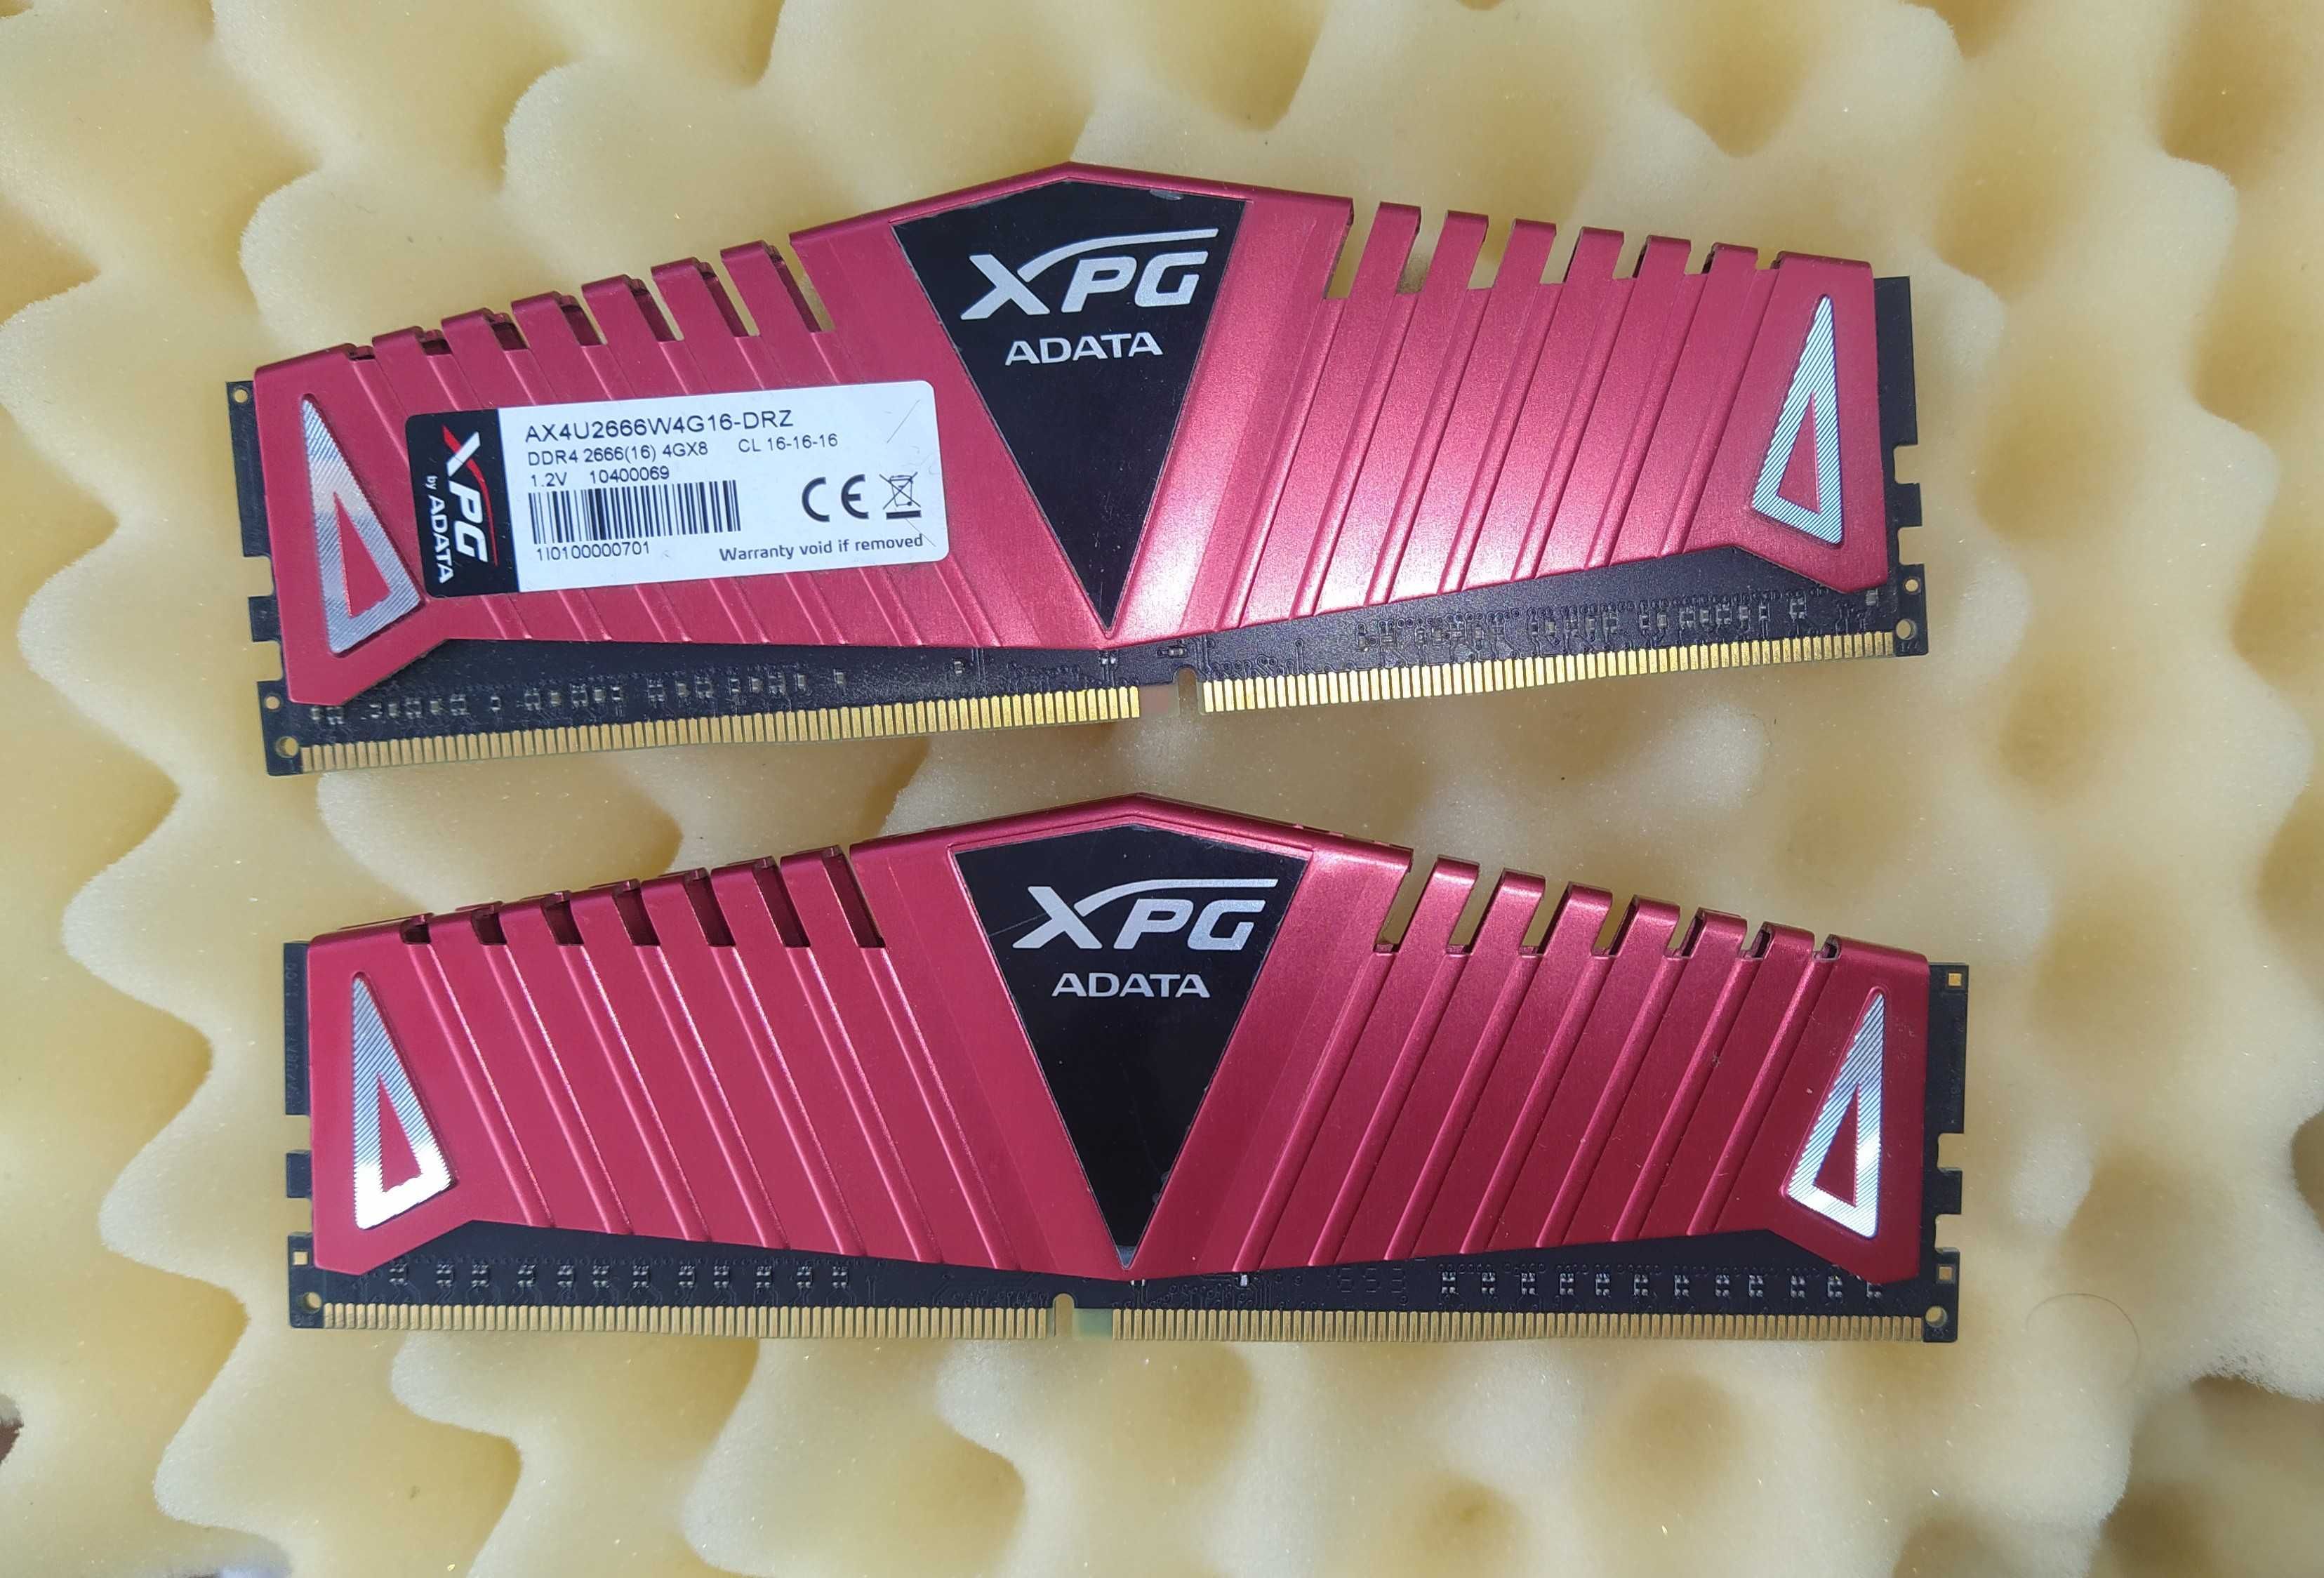 8gb DDR4 XPG Adata